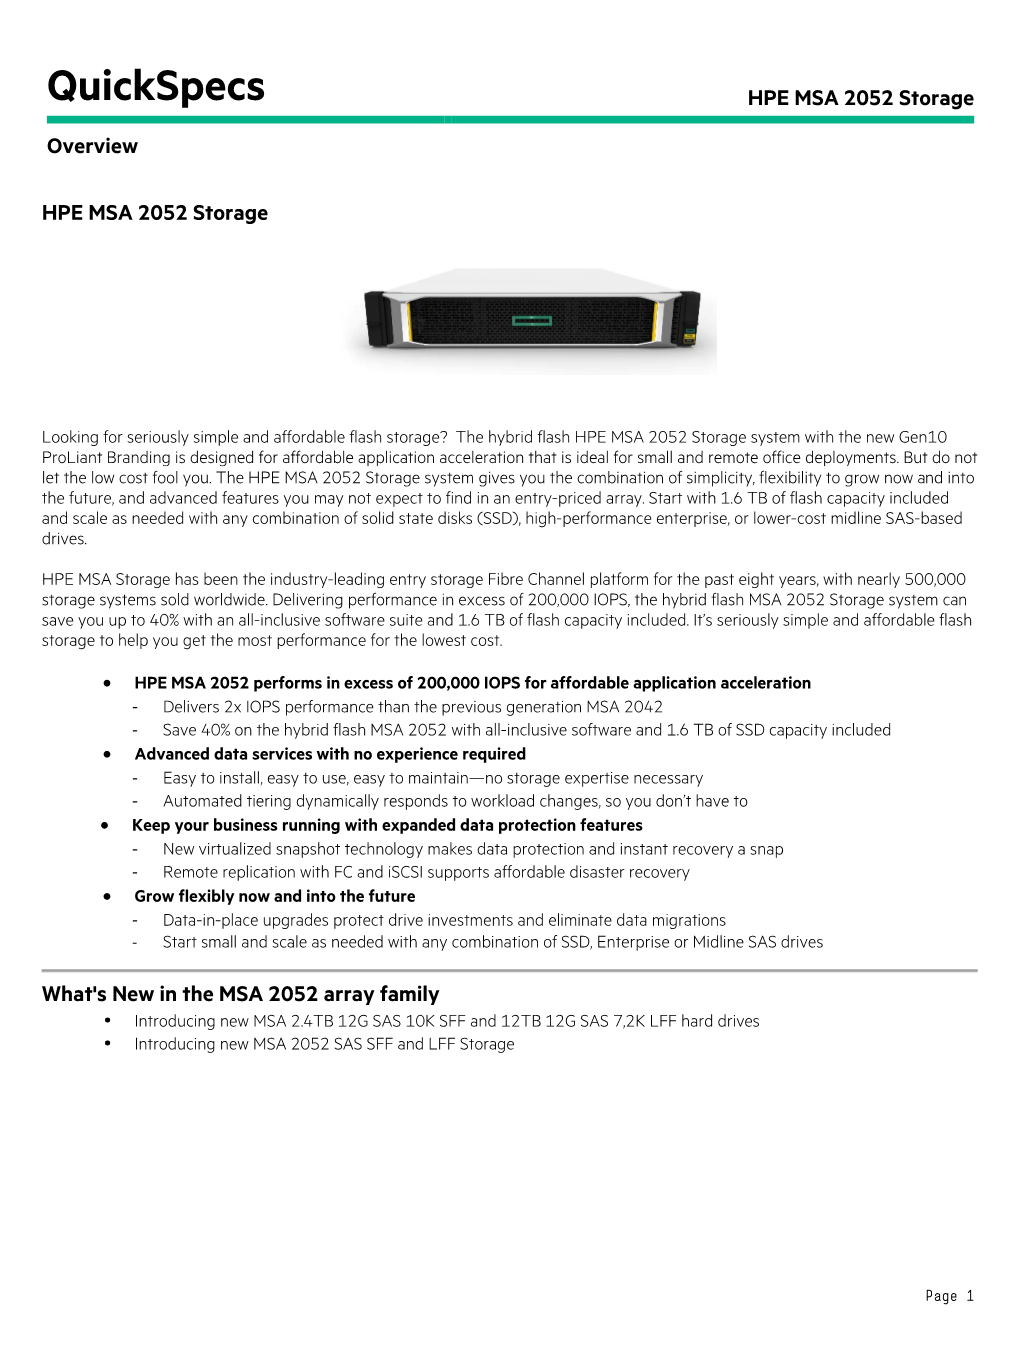 HPE MSA 2052 Storage Overview